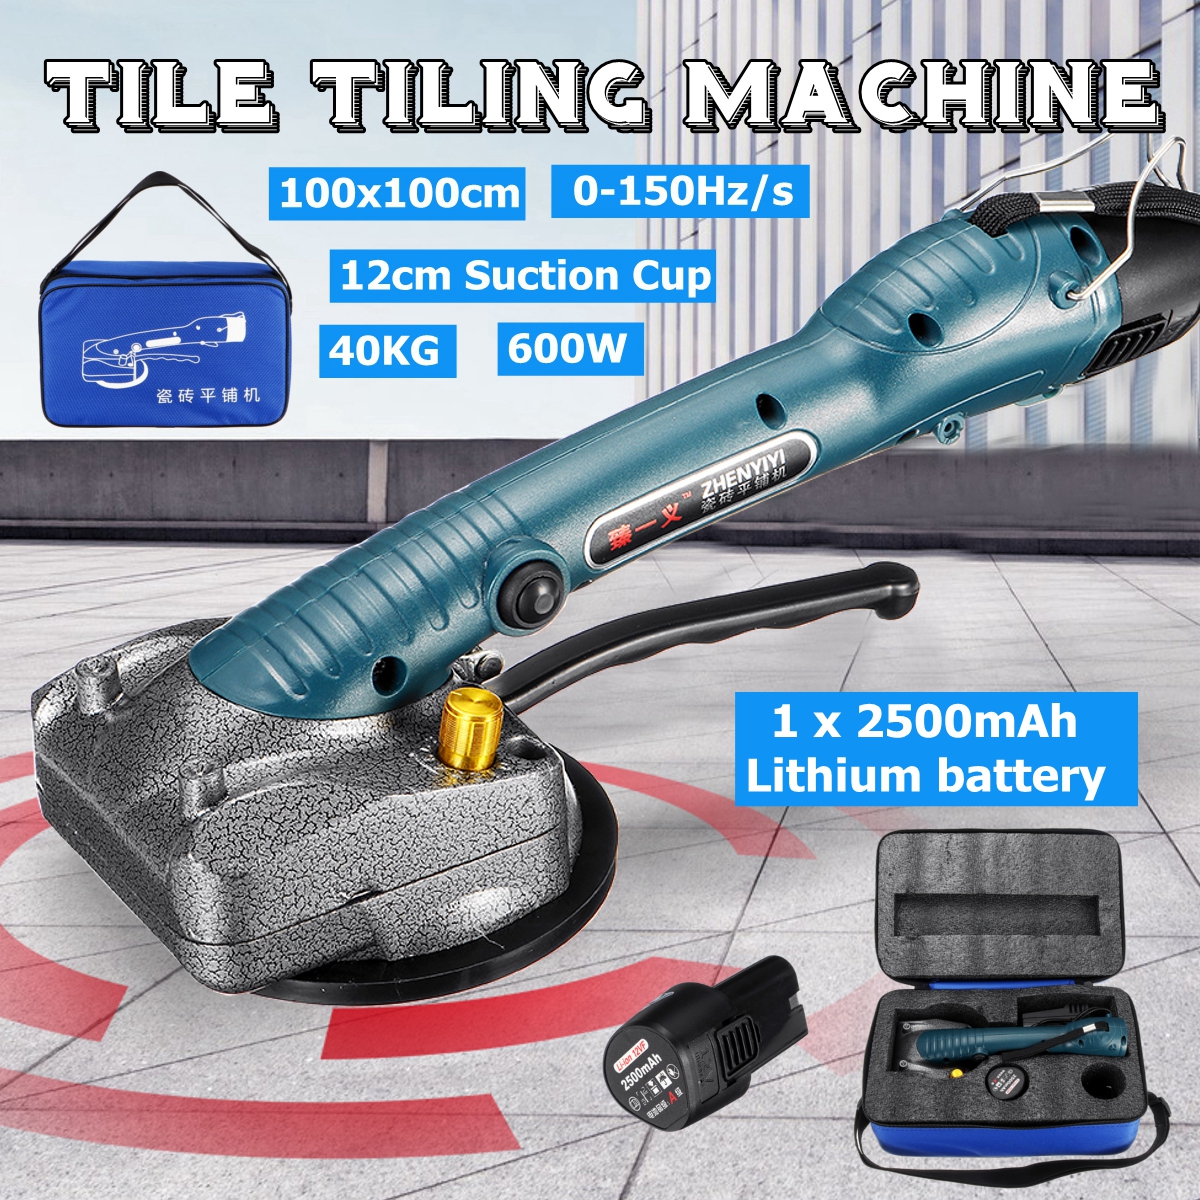 Tile-Machine-Vibrators-Tile-Tiling-Machine-Electric-Floor-Vibrator-Tiling-Artifact-Tile-Tool-1485800-2